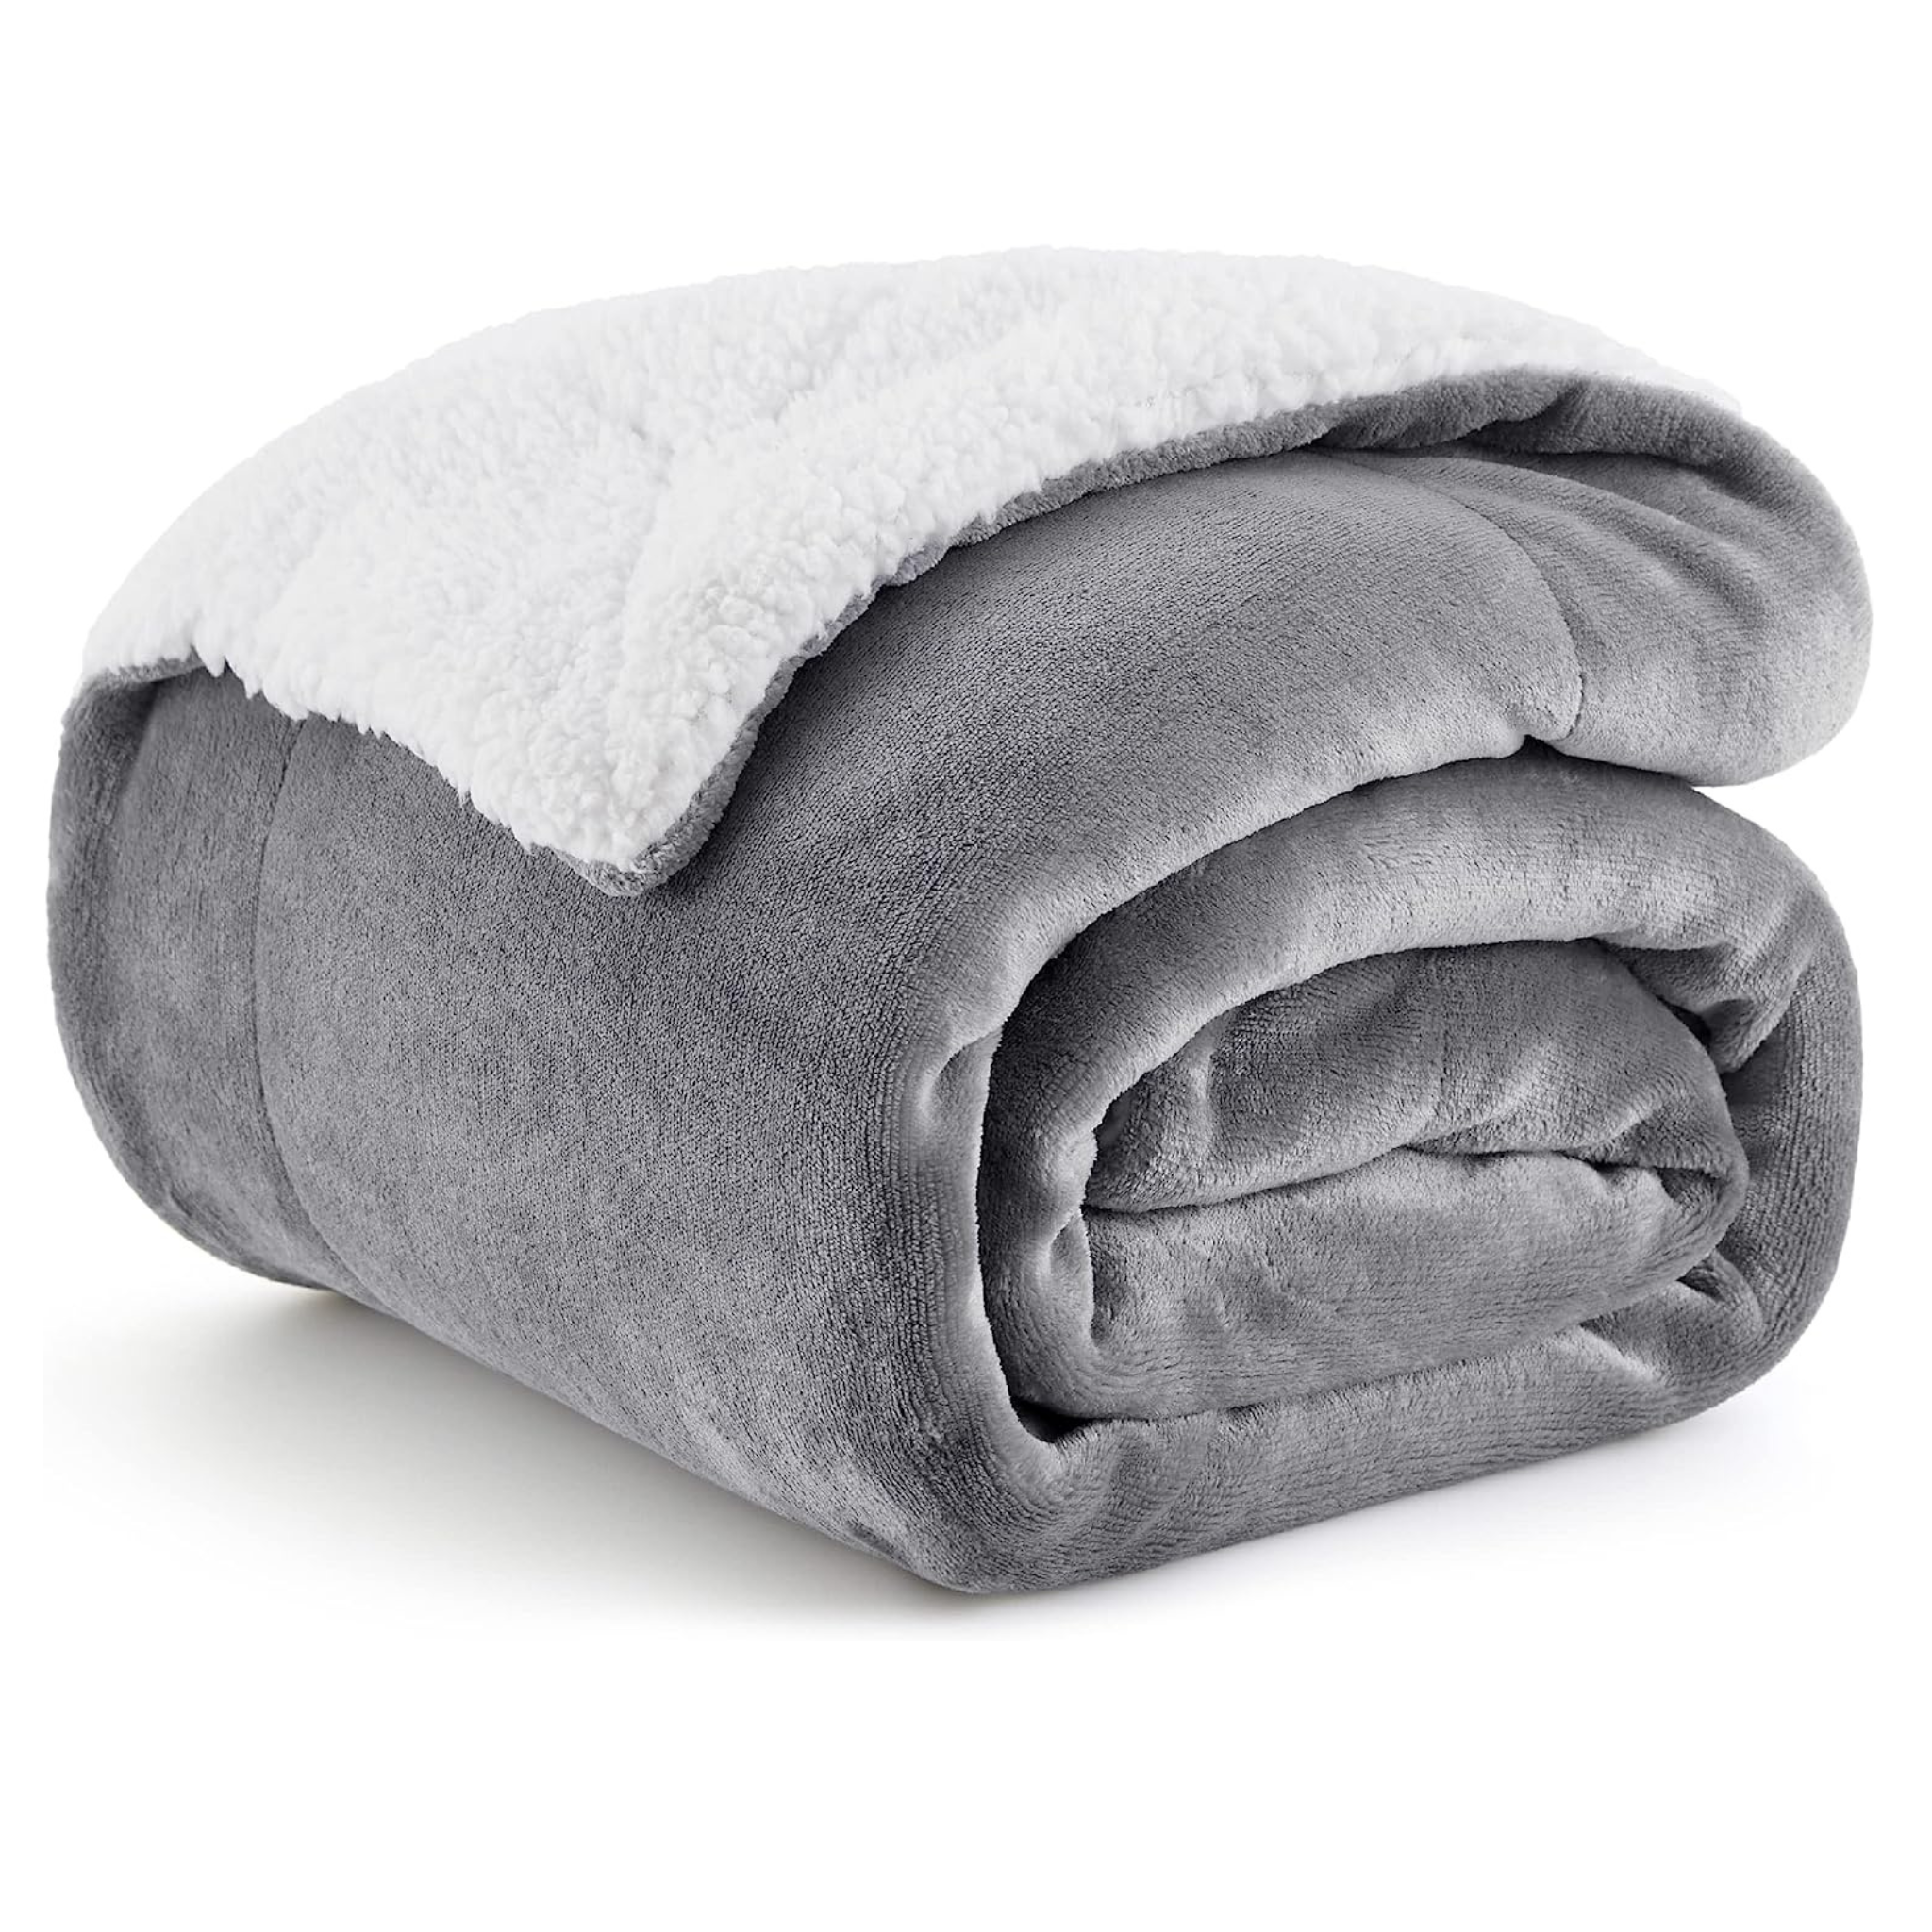 Bedsure Sherpa Fleece Throw Blanket, Grey, 50x60 Inches